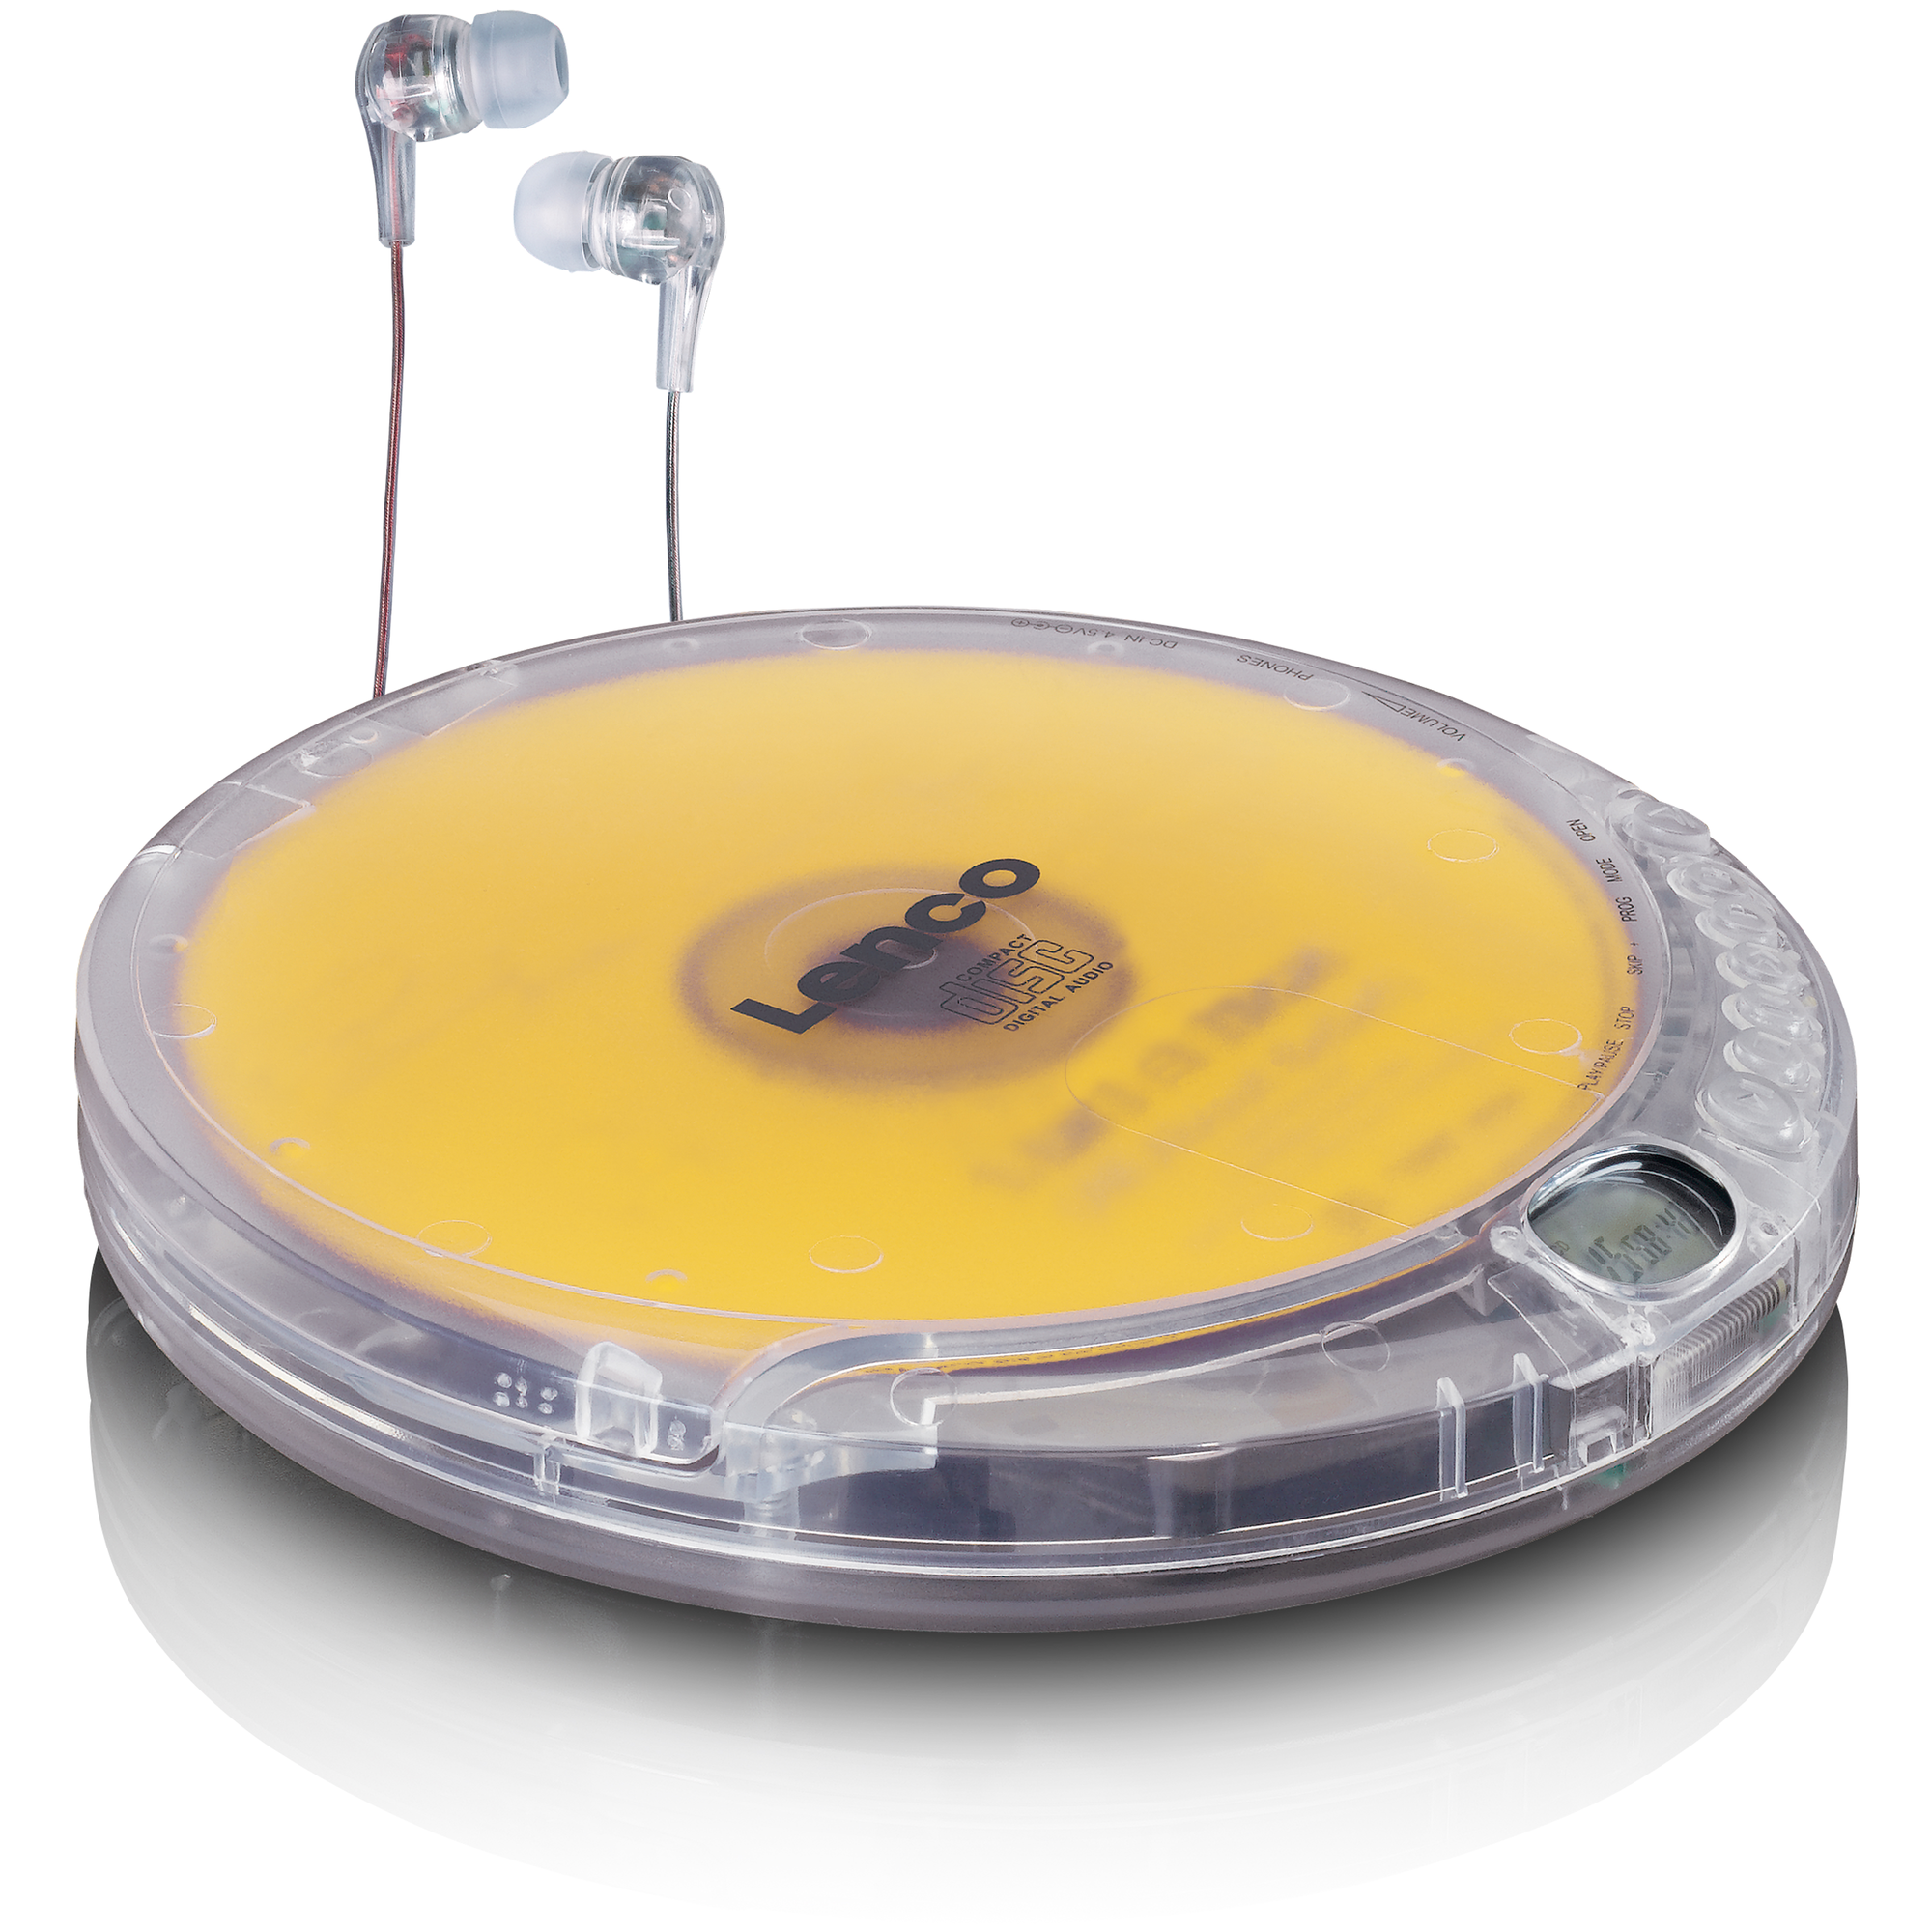 Wiederaufladbar - LENCO Transparant CD-012TR - CD-Spieler Tragbarer